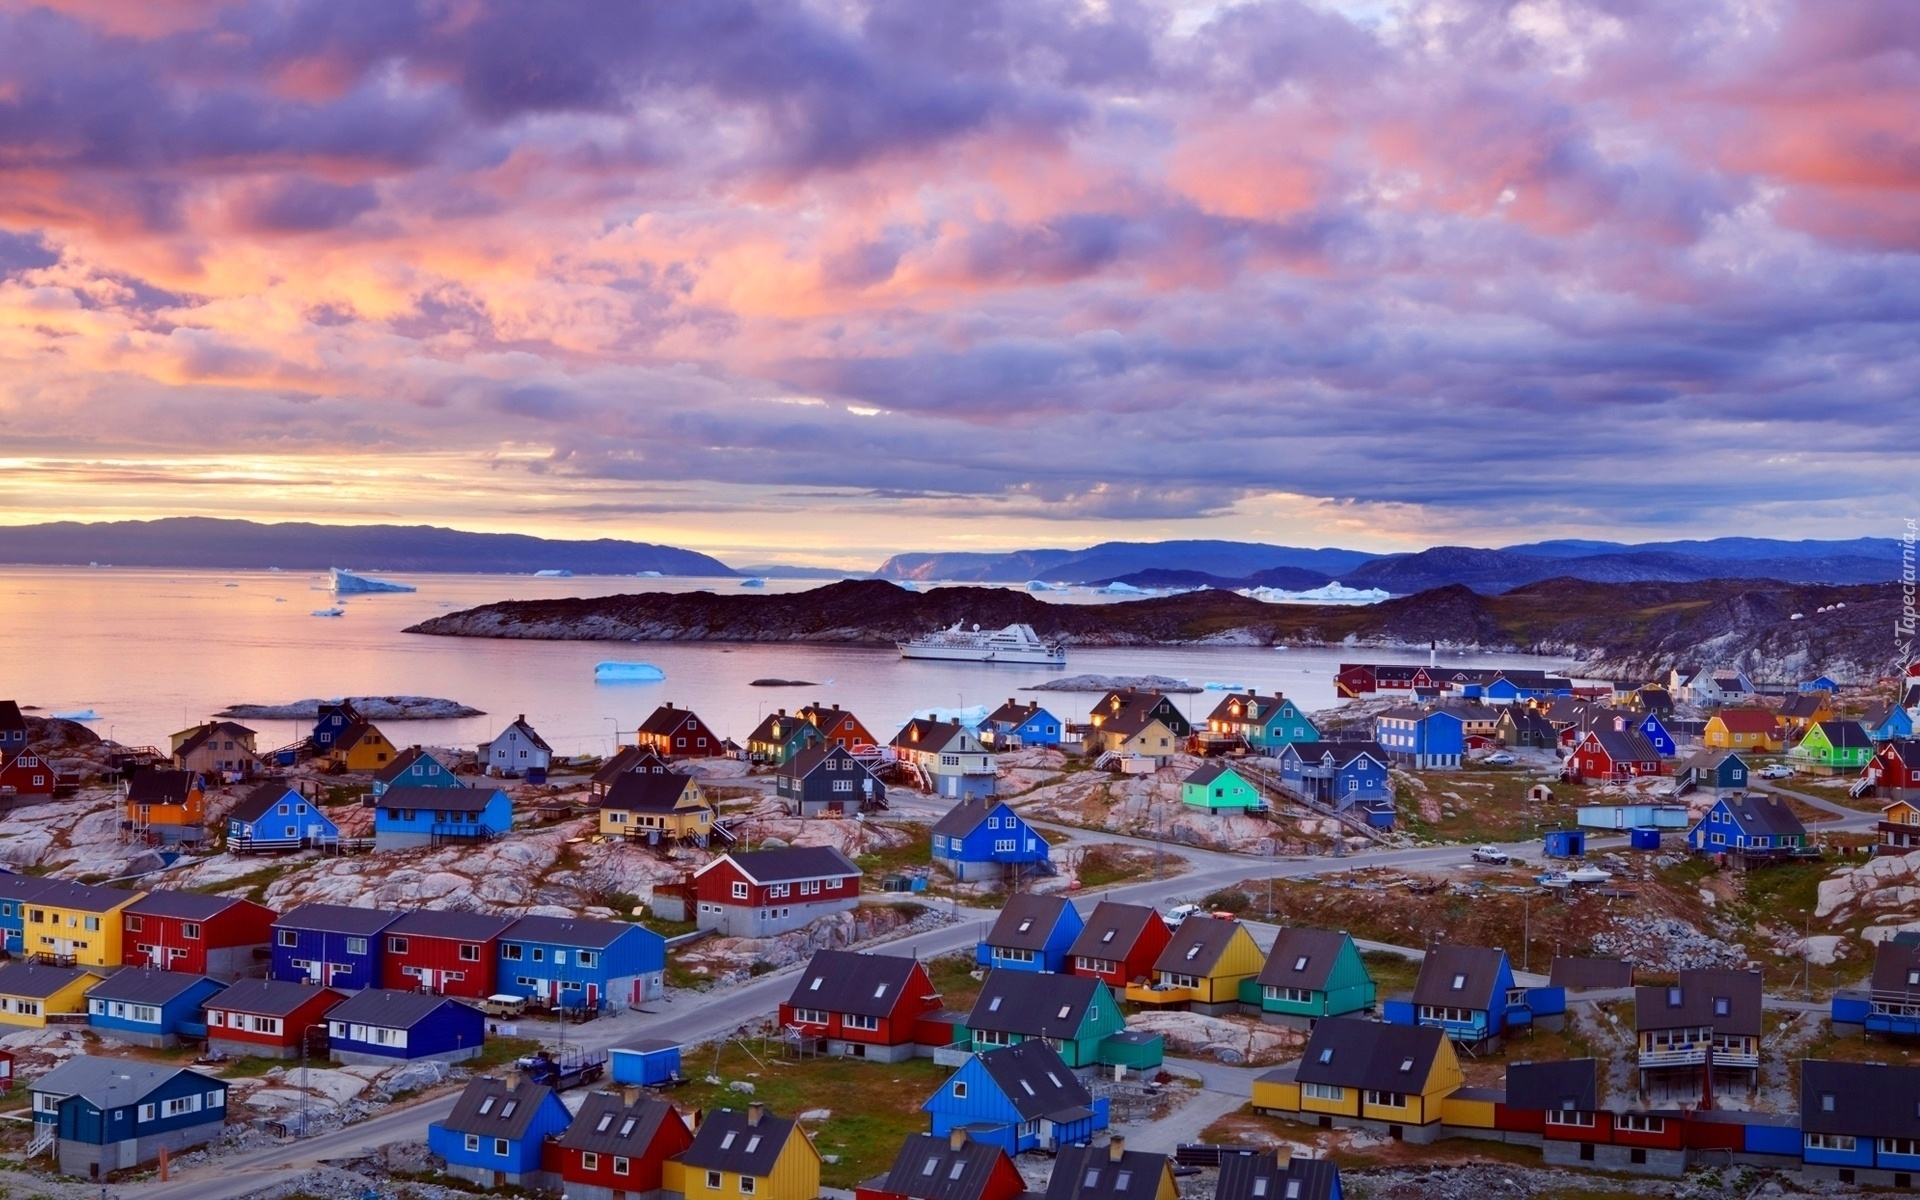 Kolorowe, Domki, Miasto, Ilulissat, Grenlandia